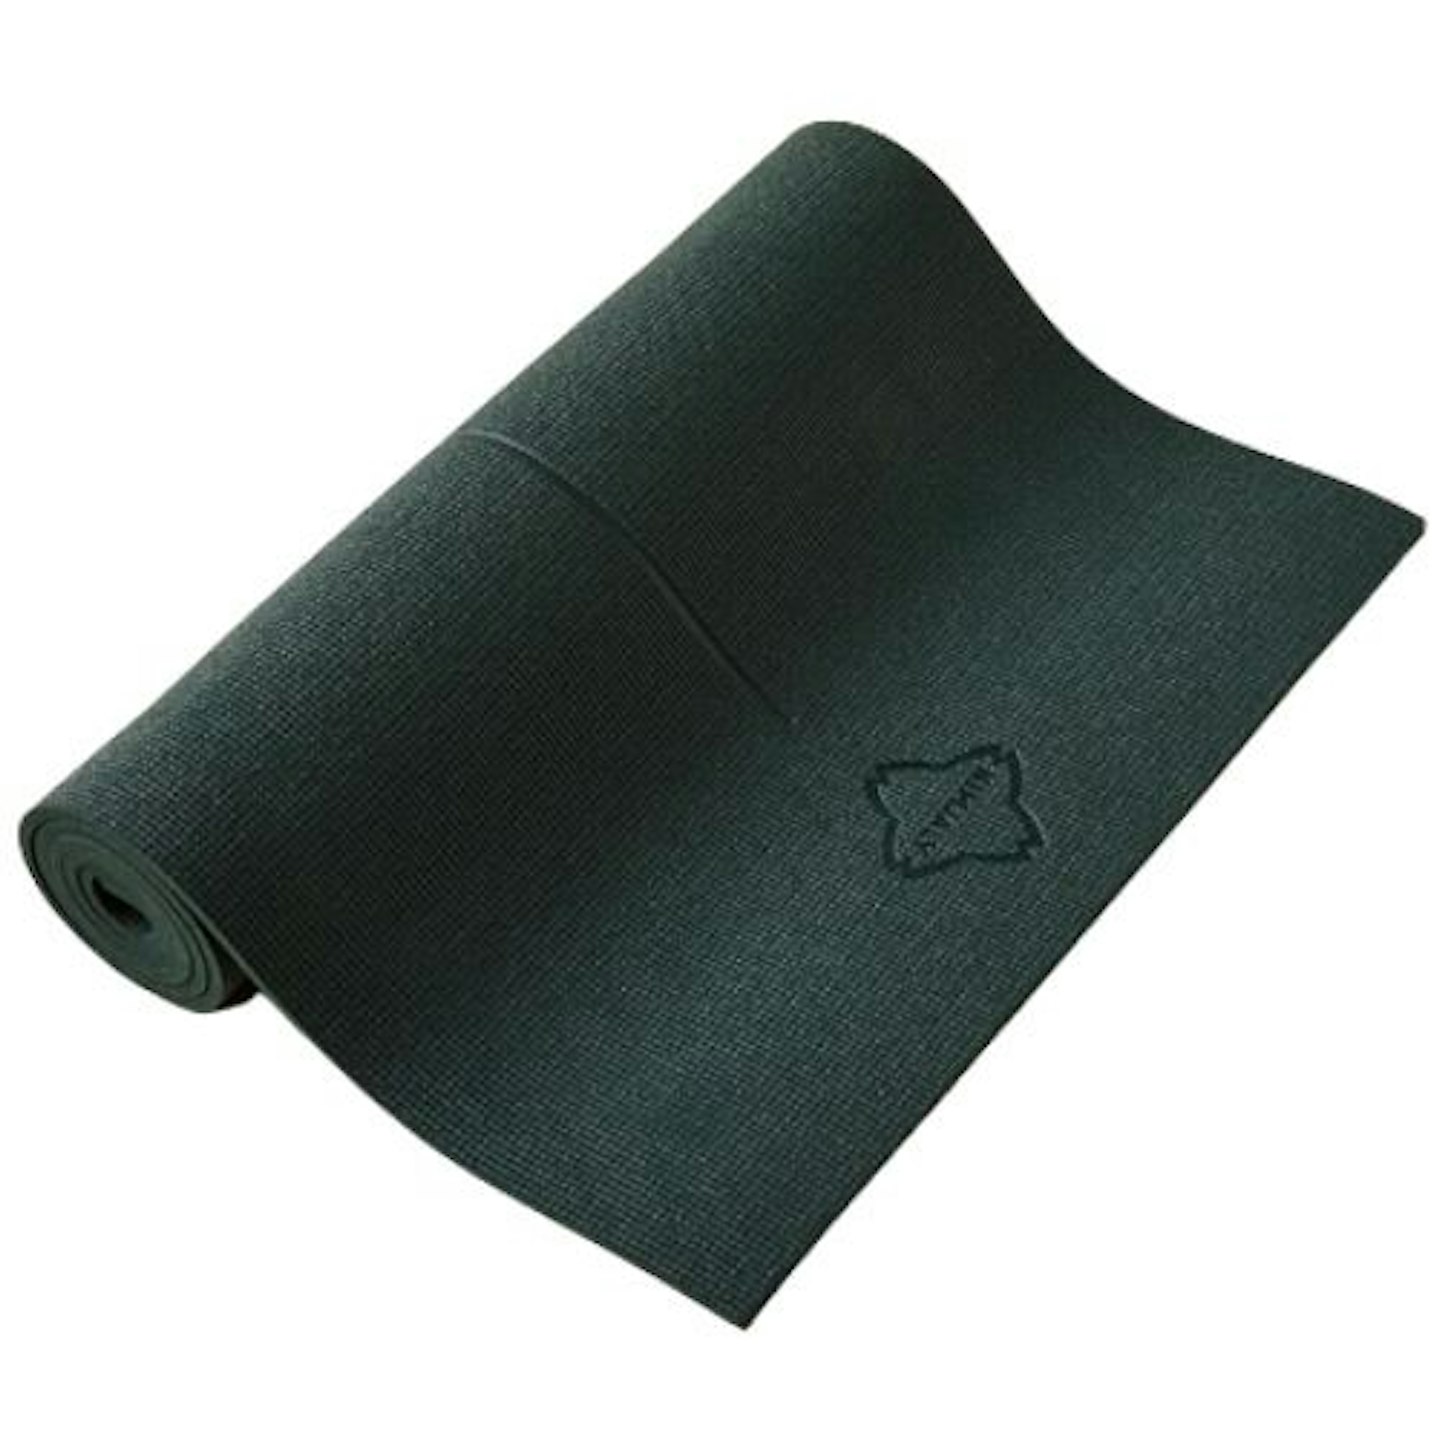 Kimjaly 8mm Comfort Yoga Mat